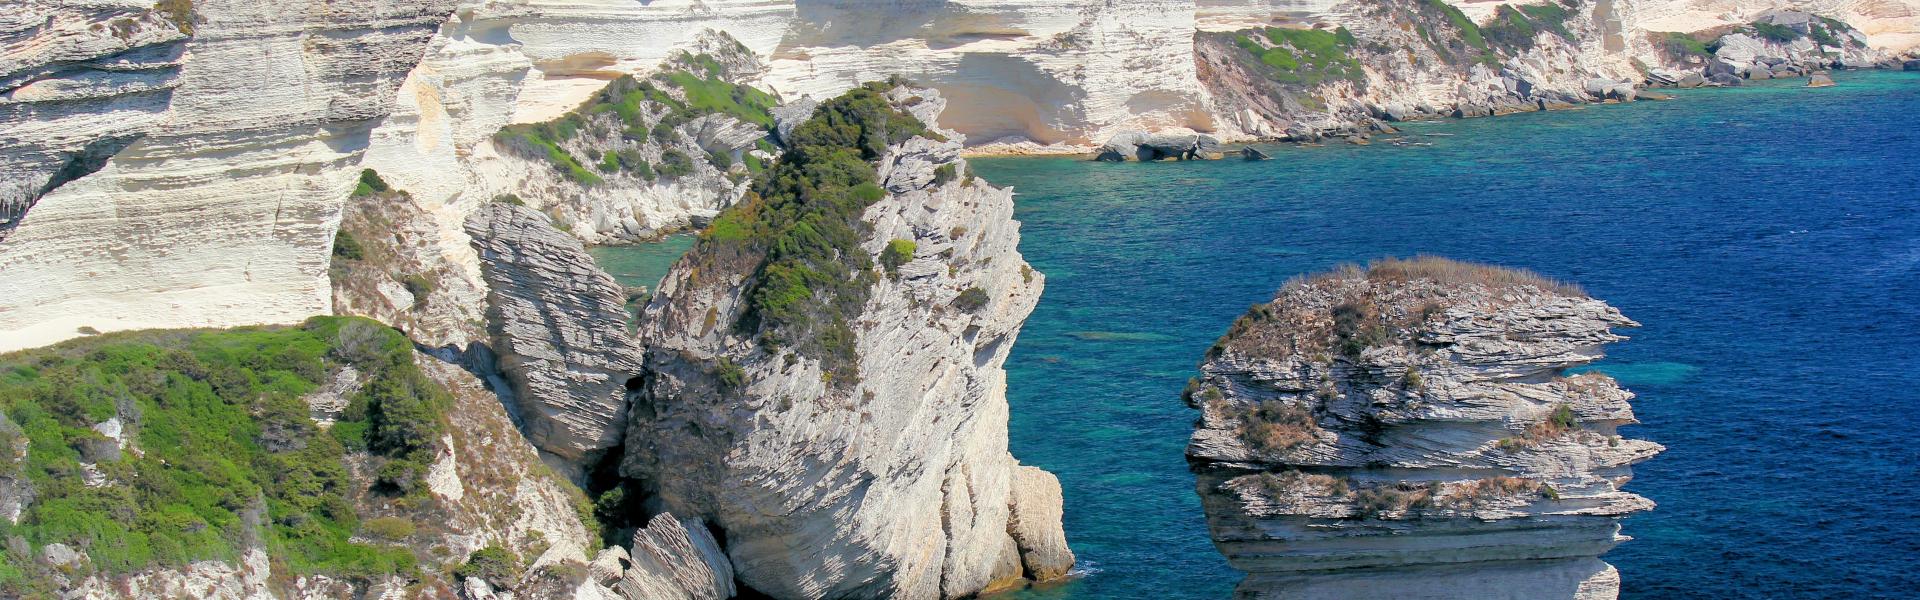 Location de vacances à Alata - Corse-du-Sud - amivac